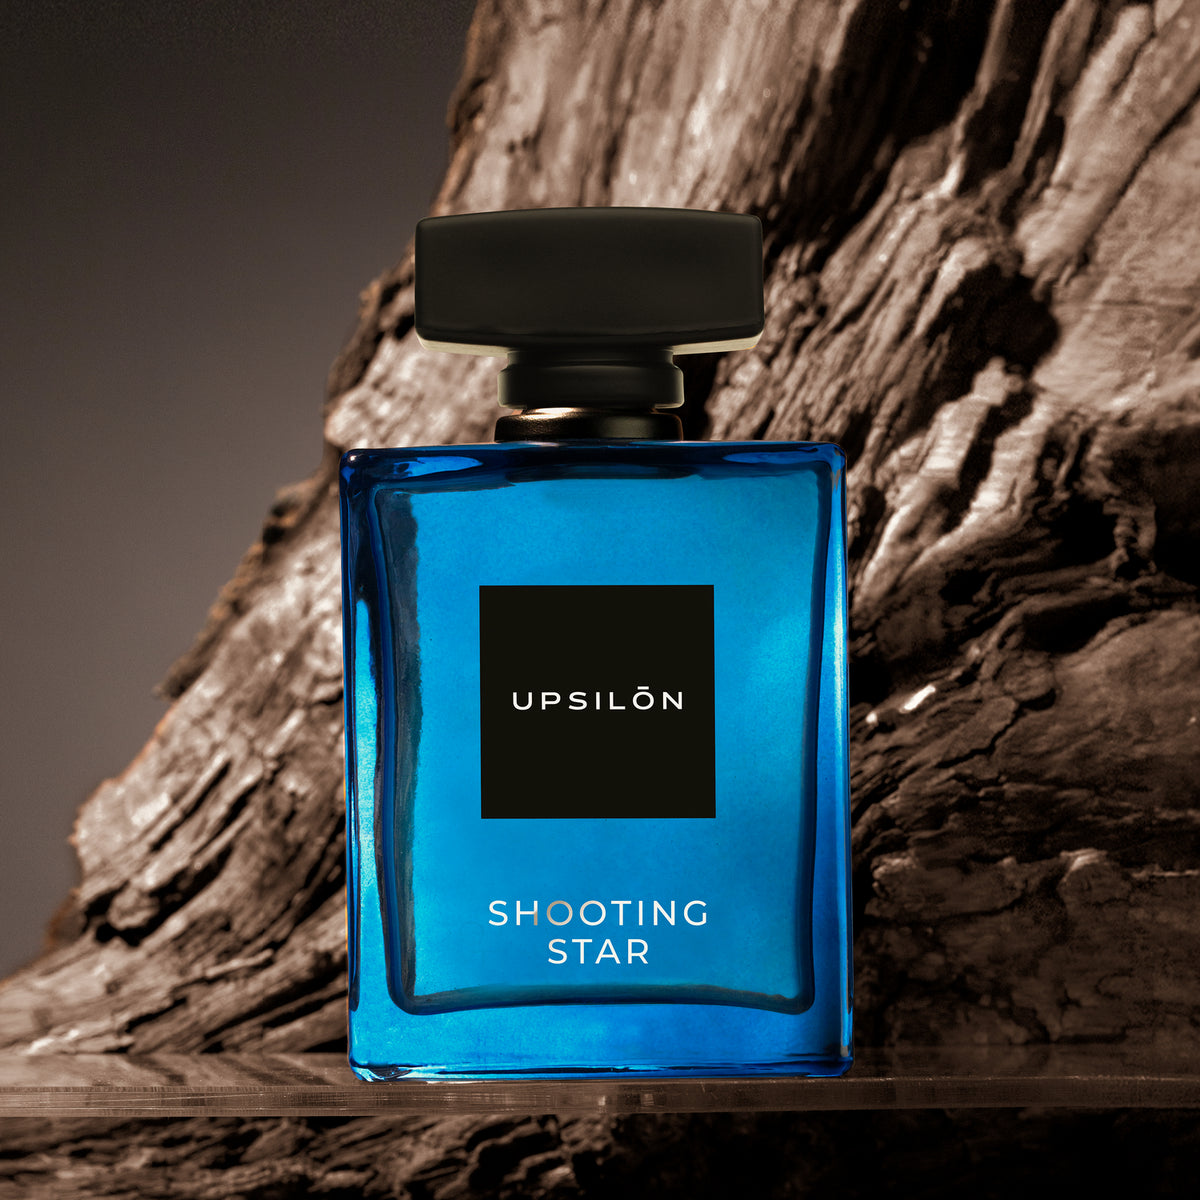 A luxurious bottle of Upsilon Shooting Star Eau de Parfum, a long-lasting and powerful fragrance for men